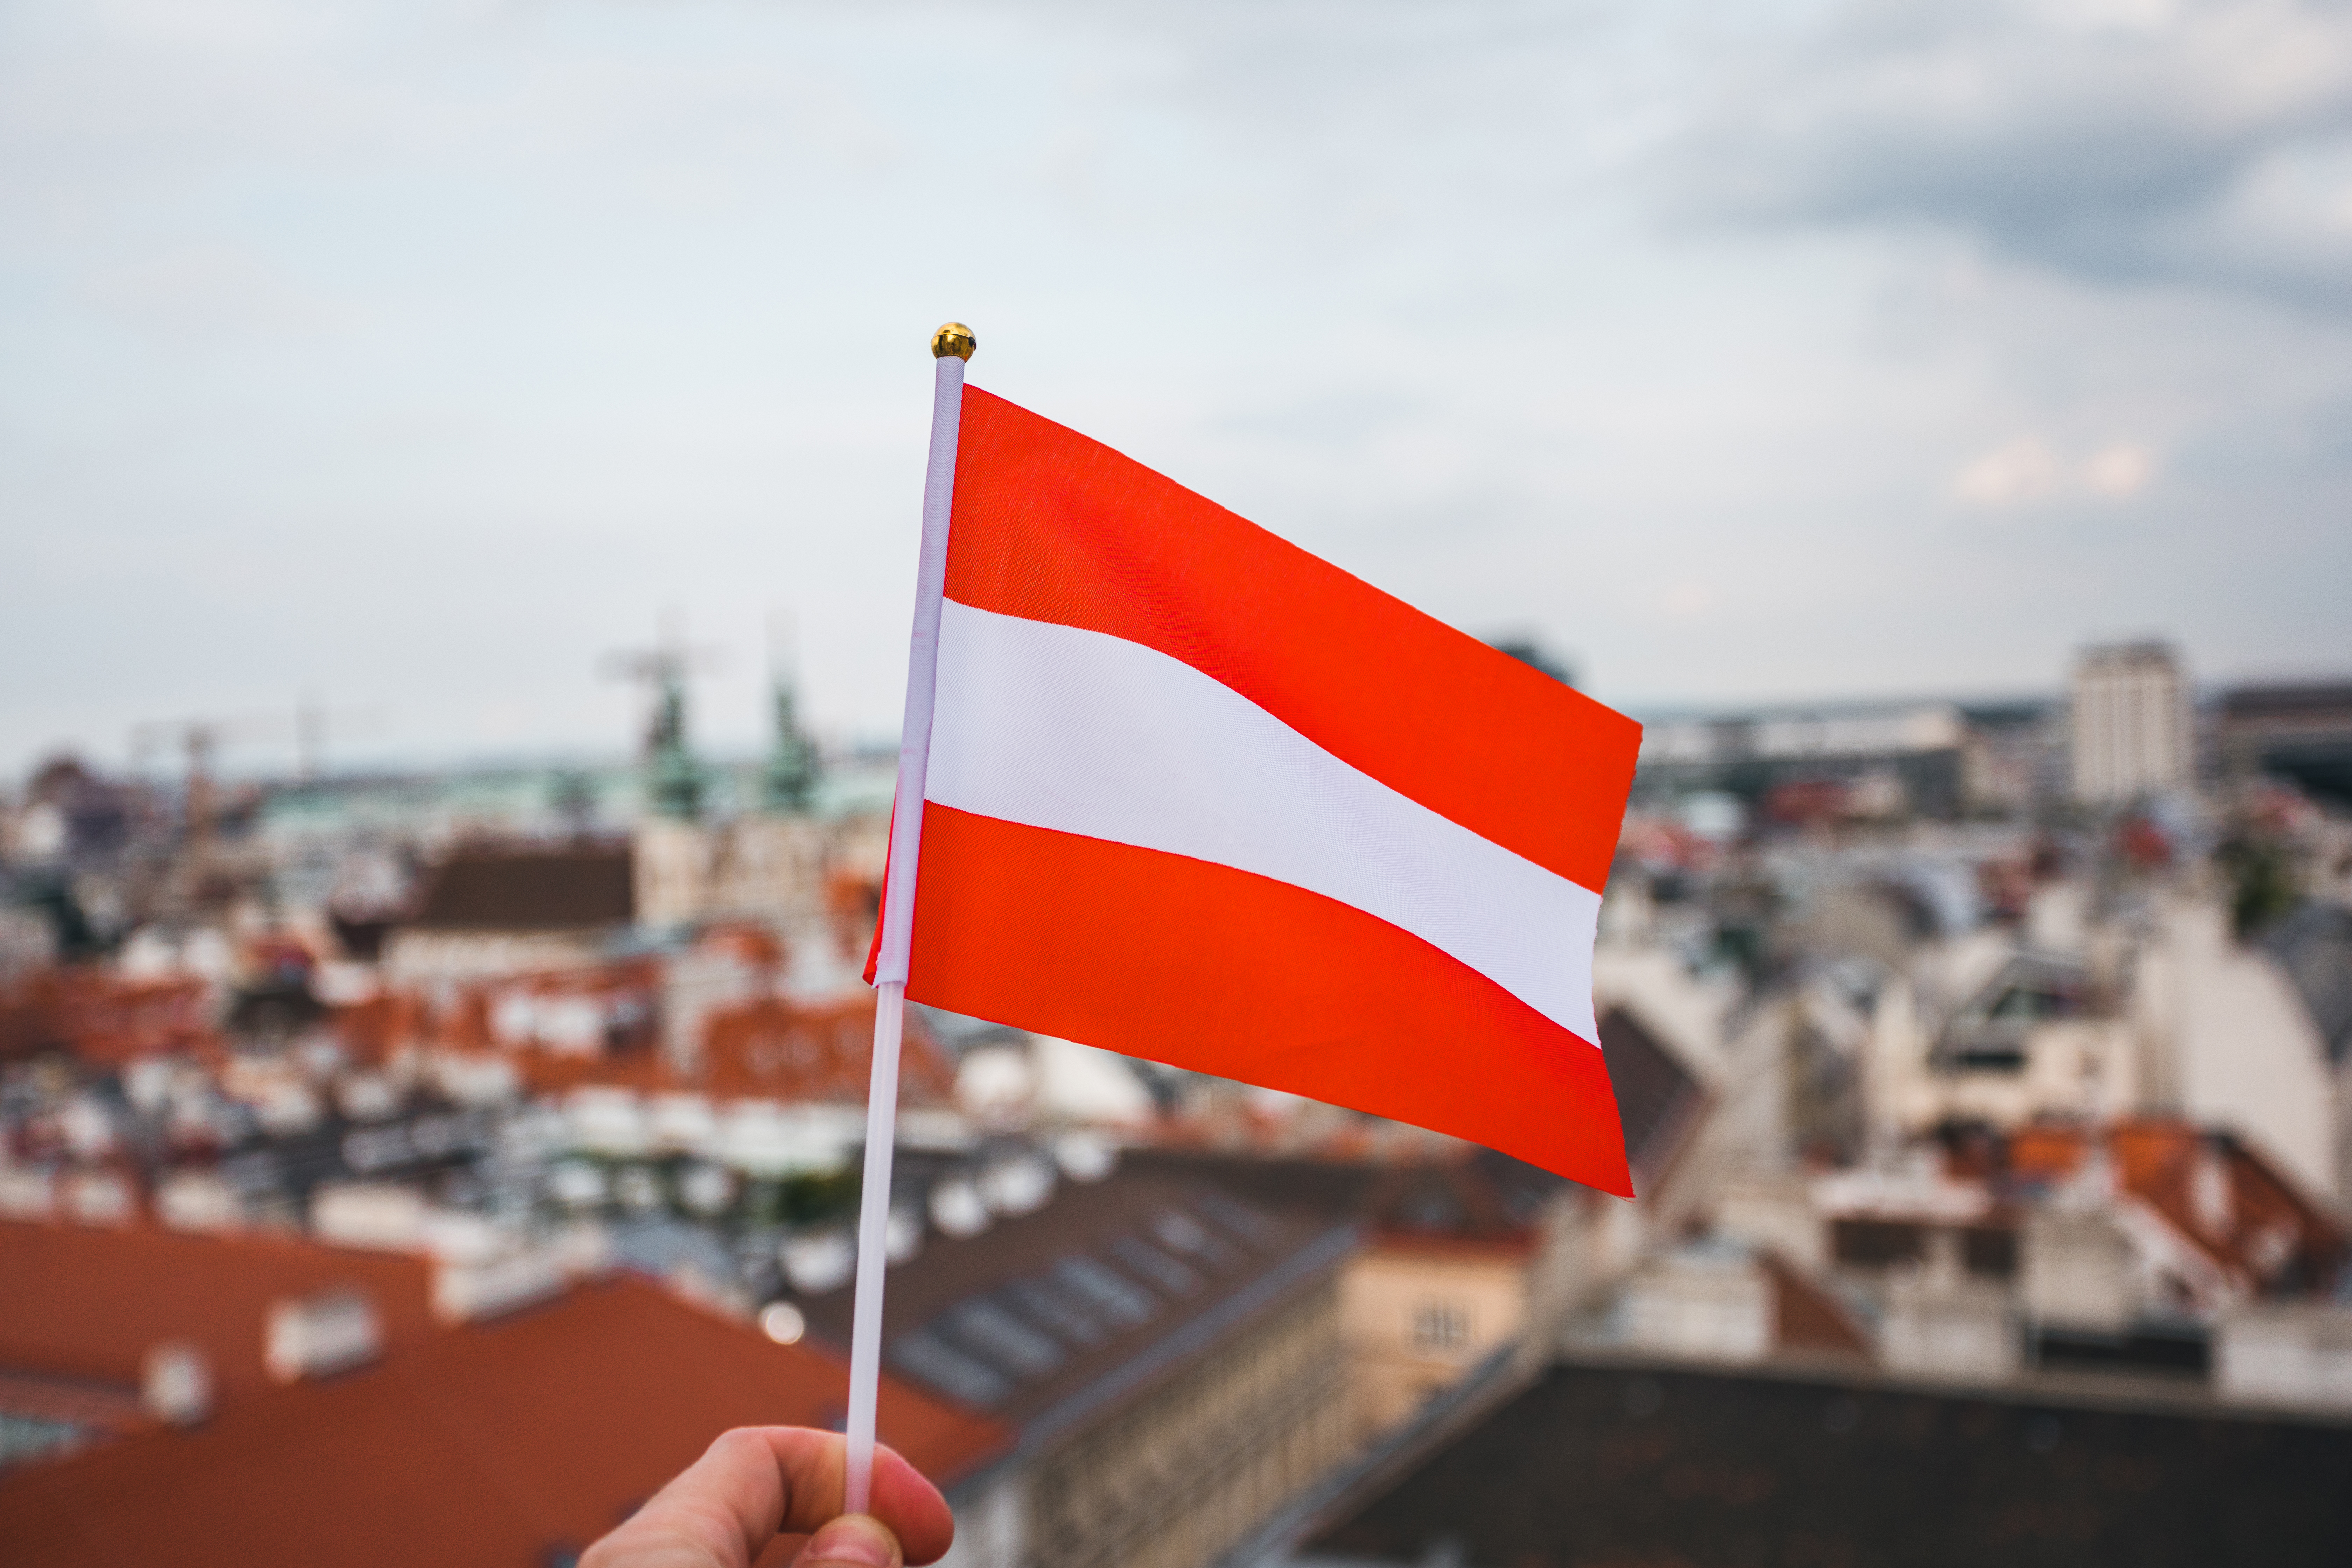 The flag symbolizes the citizenship of Austria